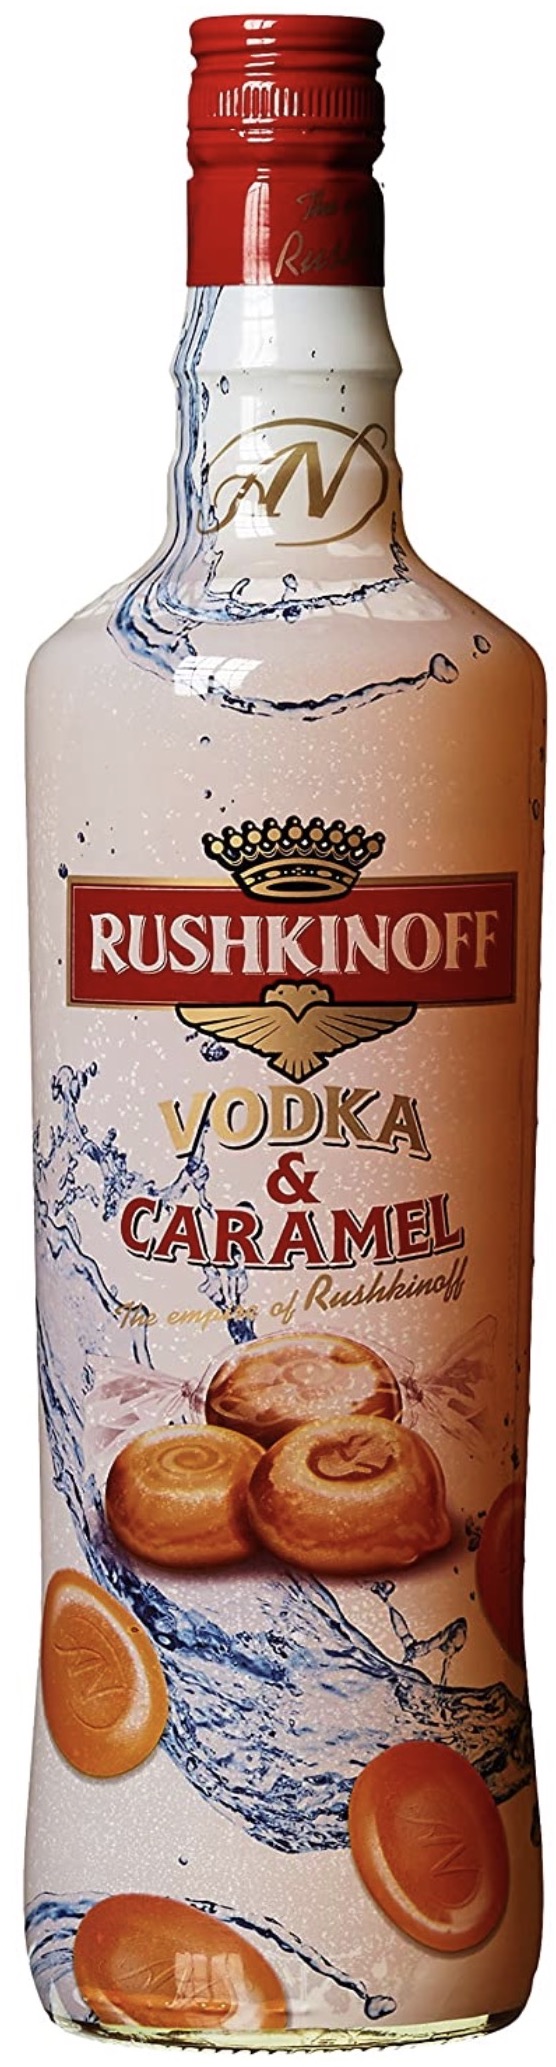 Rushkinoff Vodka & Caramel Likör 18% vol. 1,0L